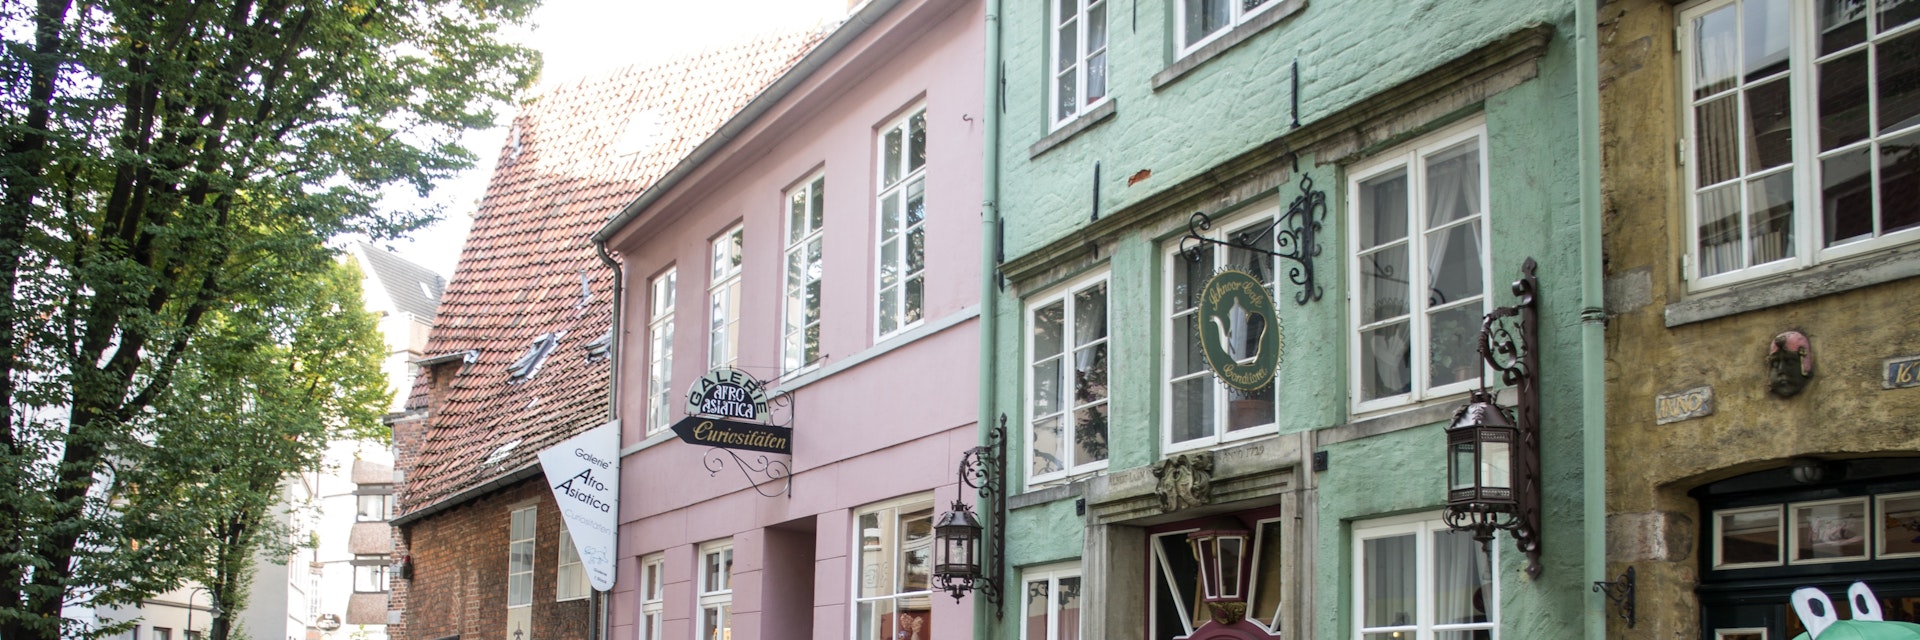 Germany, Bremen, Schnoor Quarter, cobblestone Street